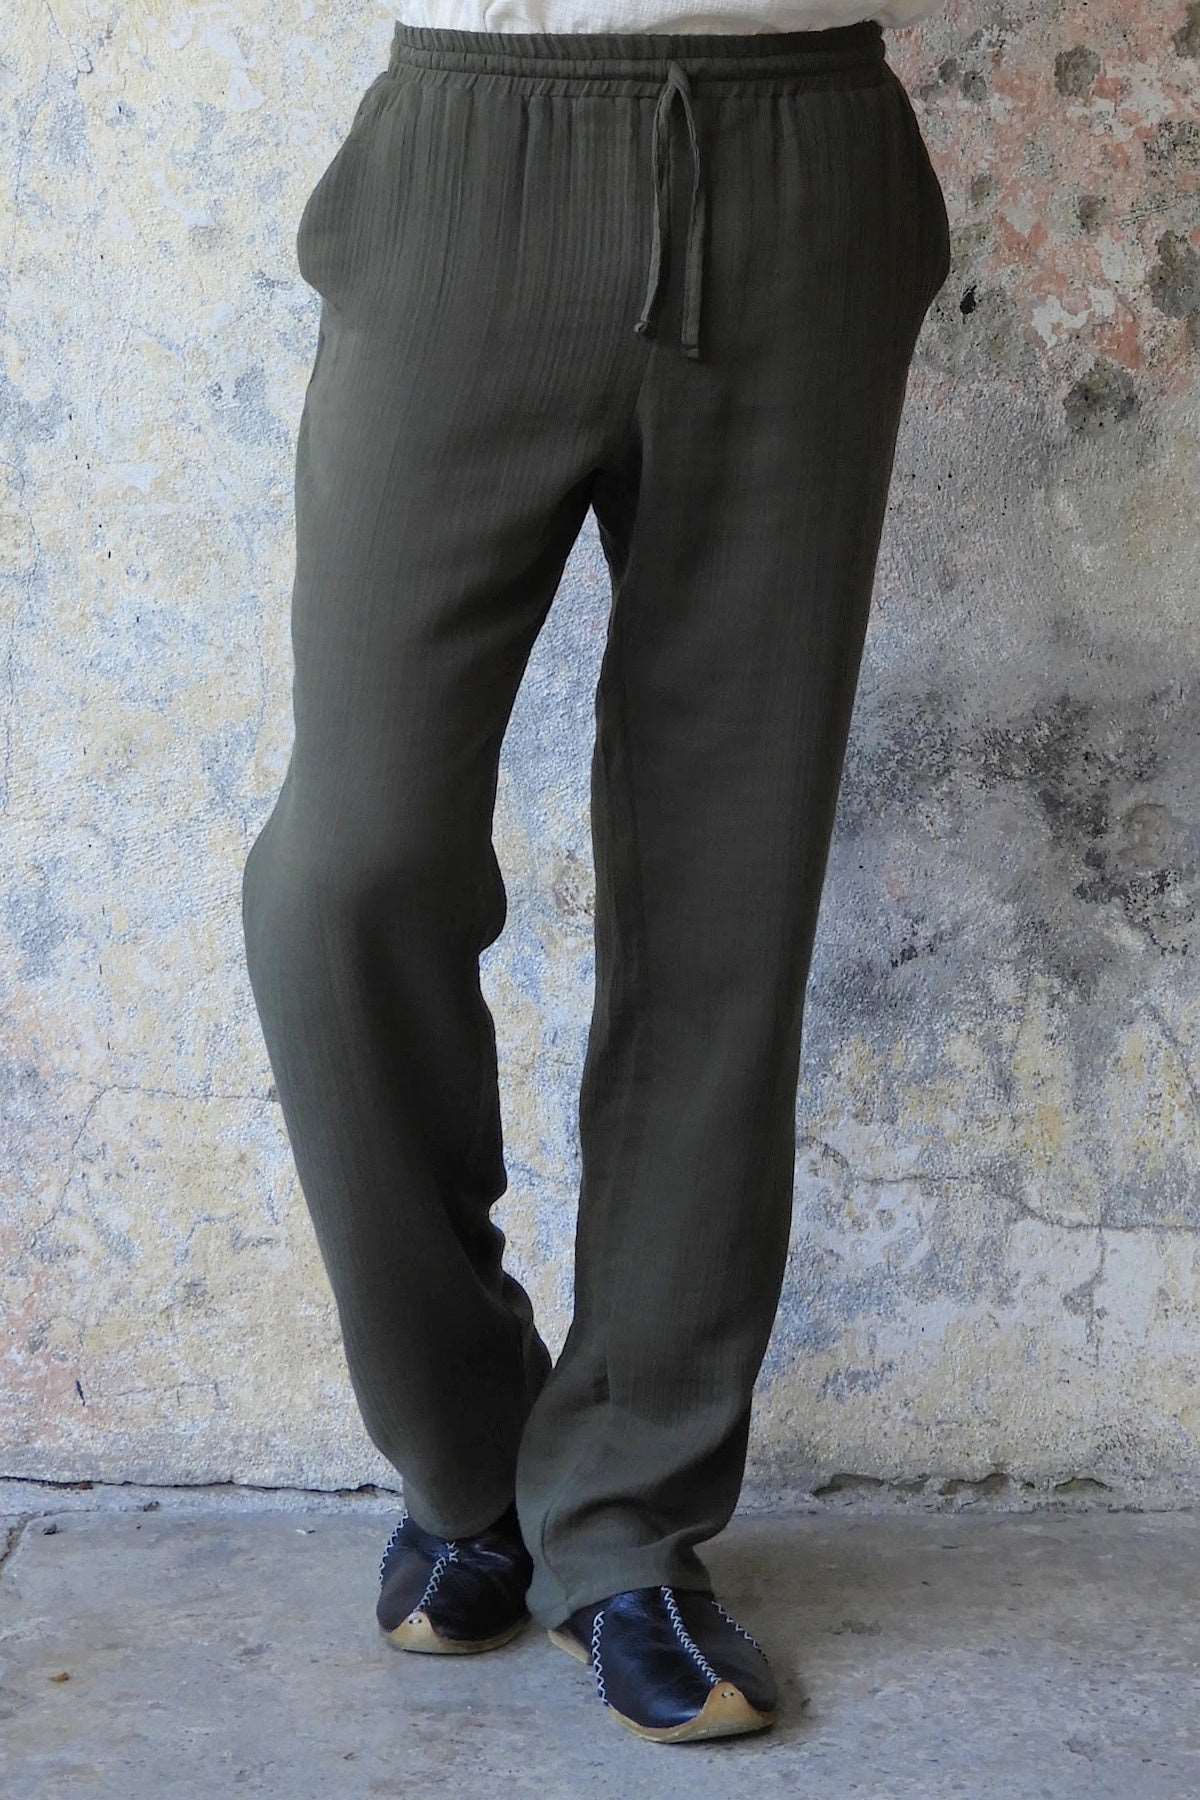 Sustainable  | DUNE Men's Gauze Cotton Pants (Army Green, Dusty Mint) by Odana's